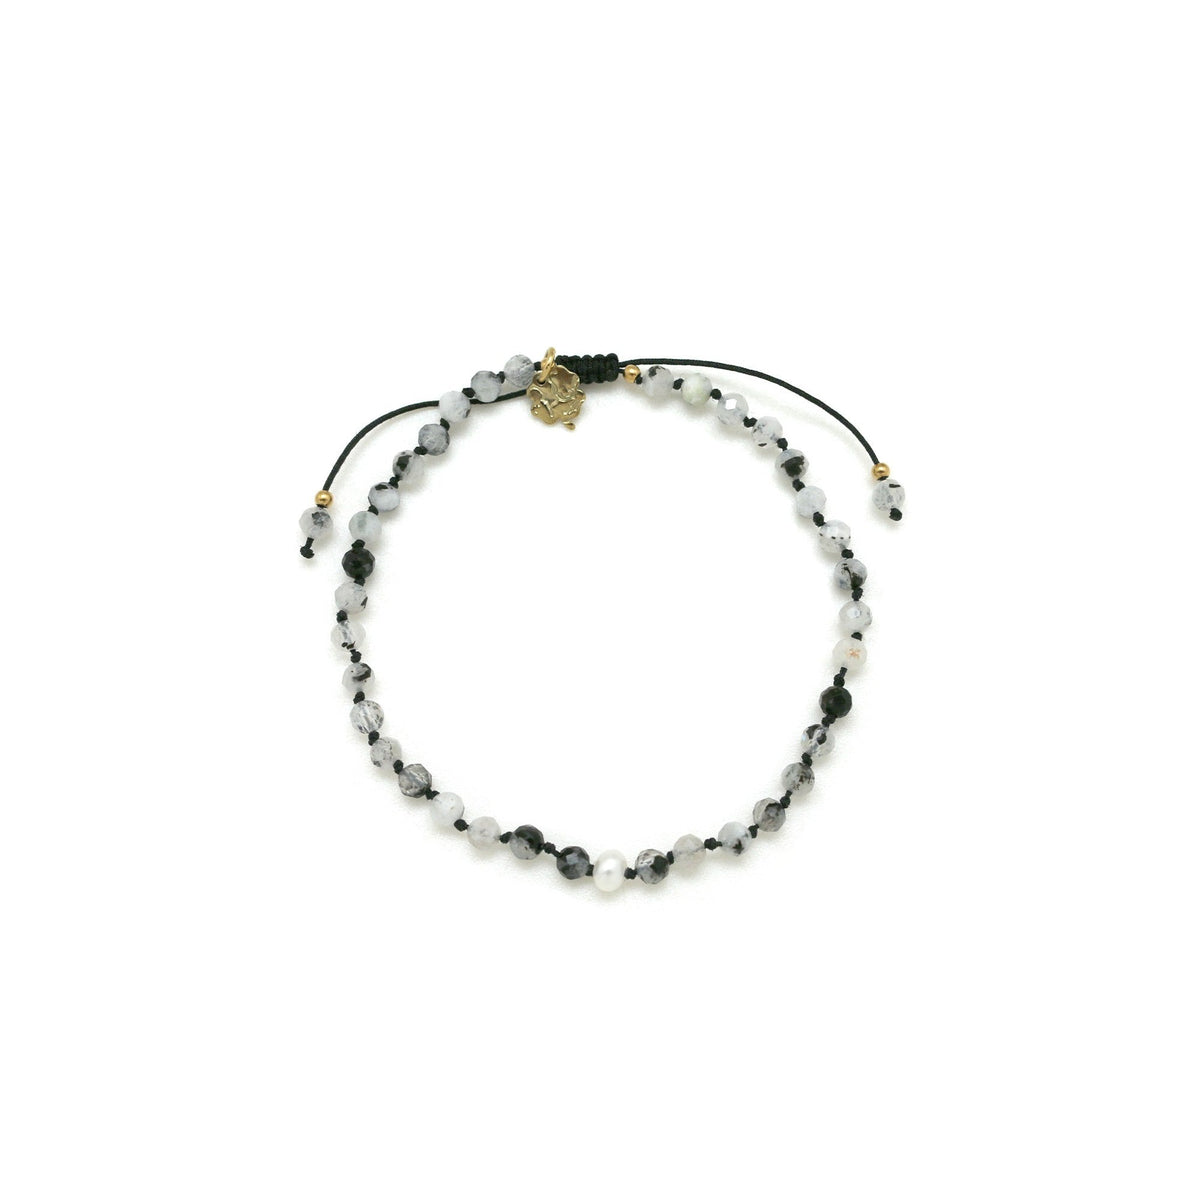 Adjustable moonstone bracelet with pearl